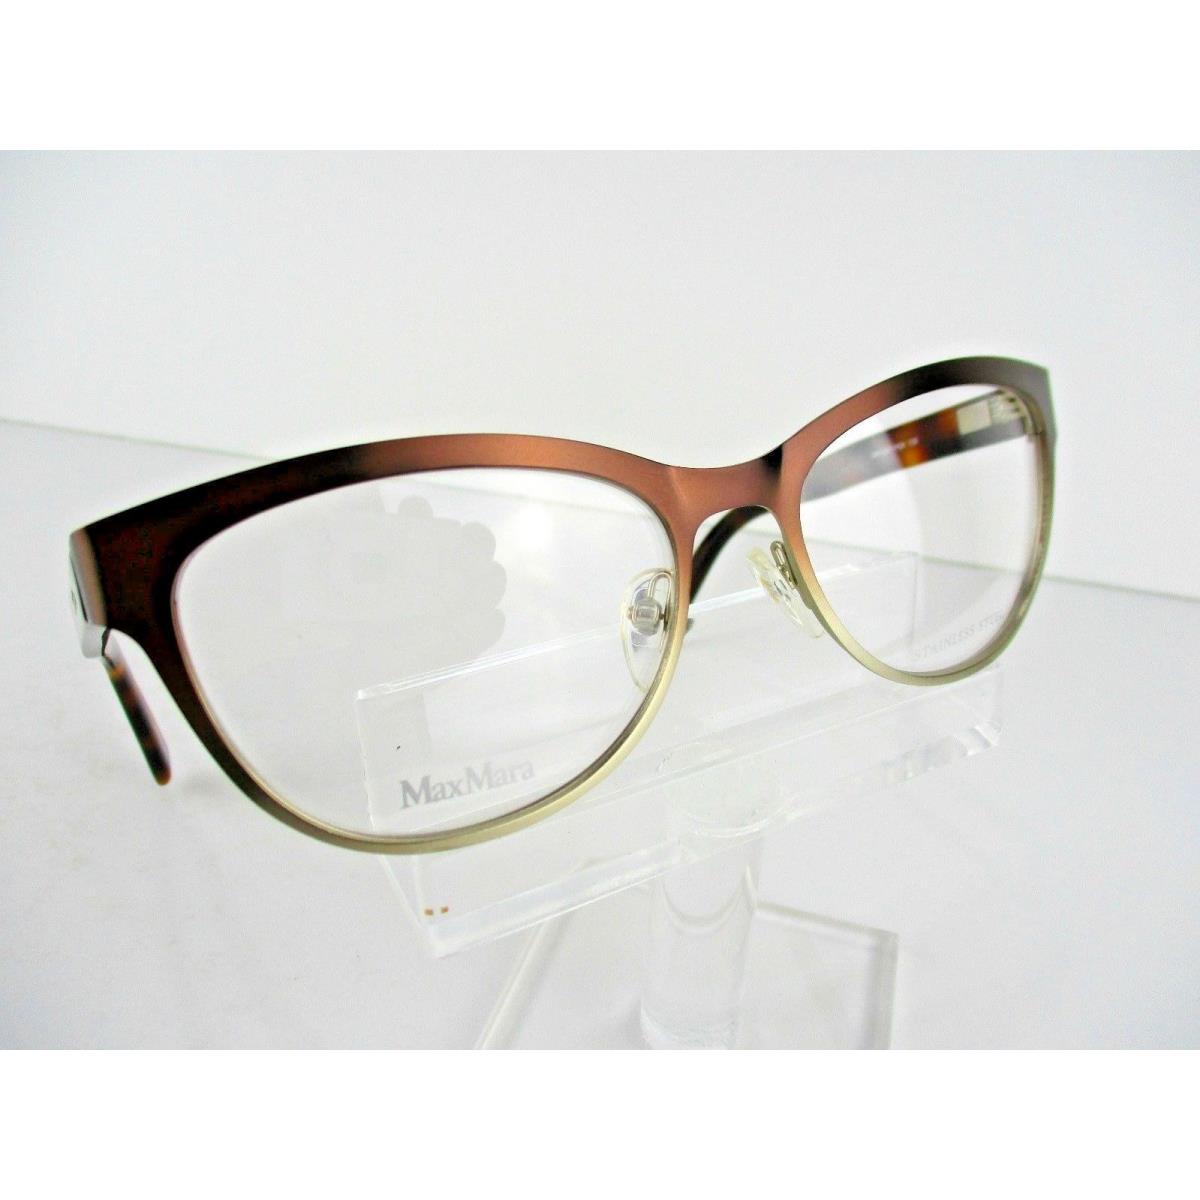 Max Mara MM 1241 Fqk Brown Gold Havana 54 x 17 135 mm Eyeglasses Frames